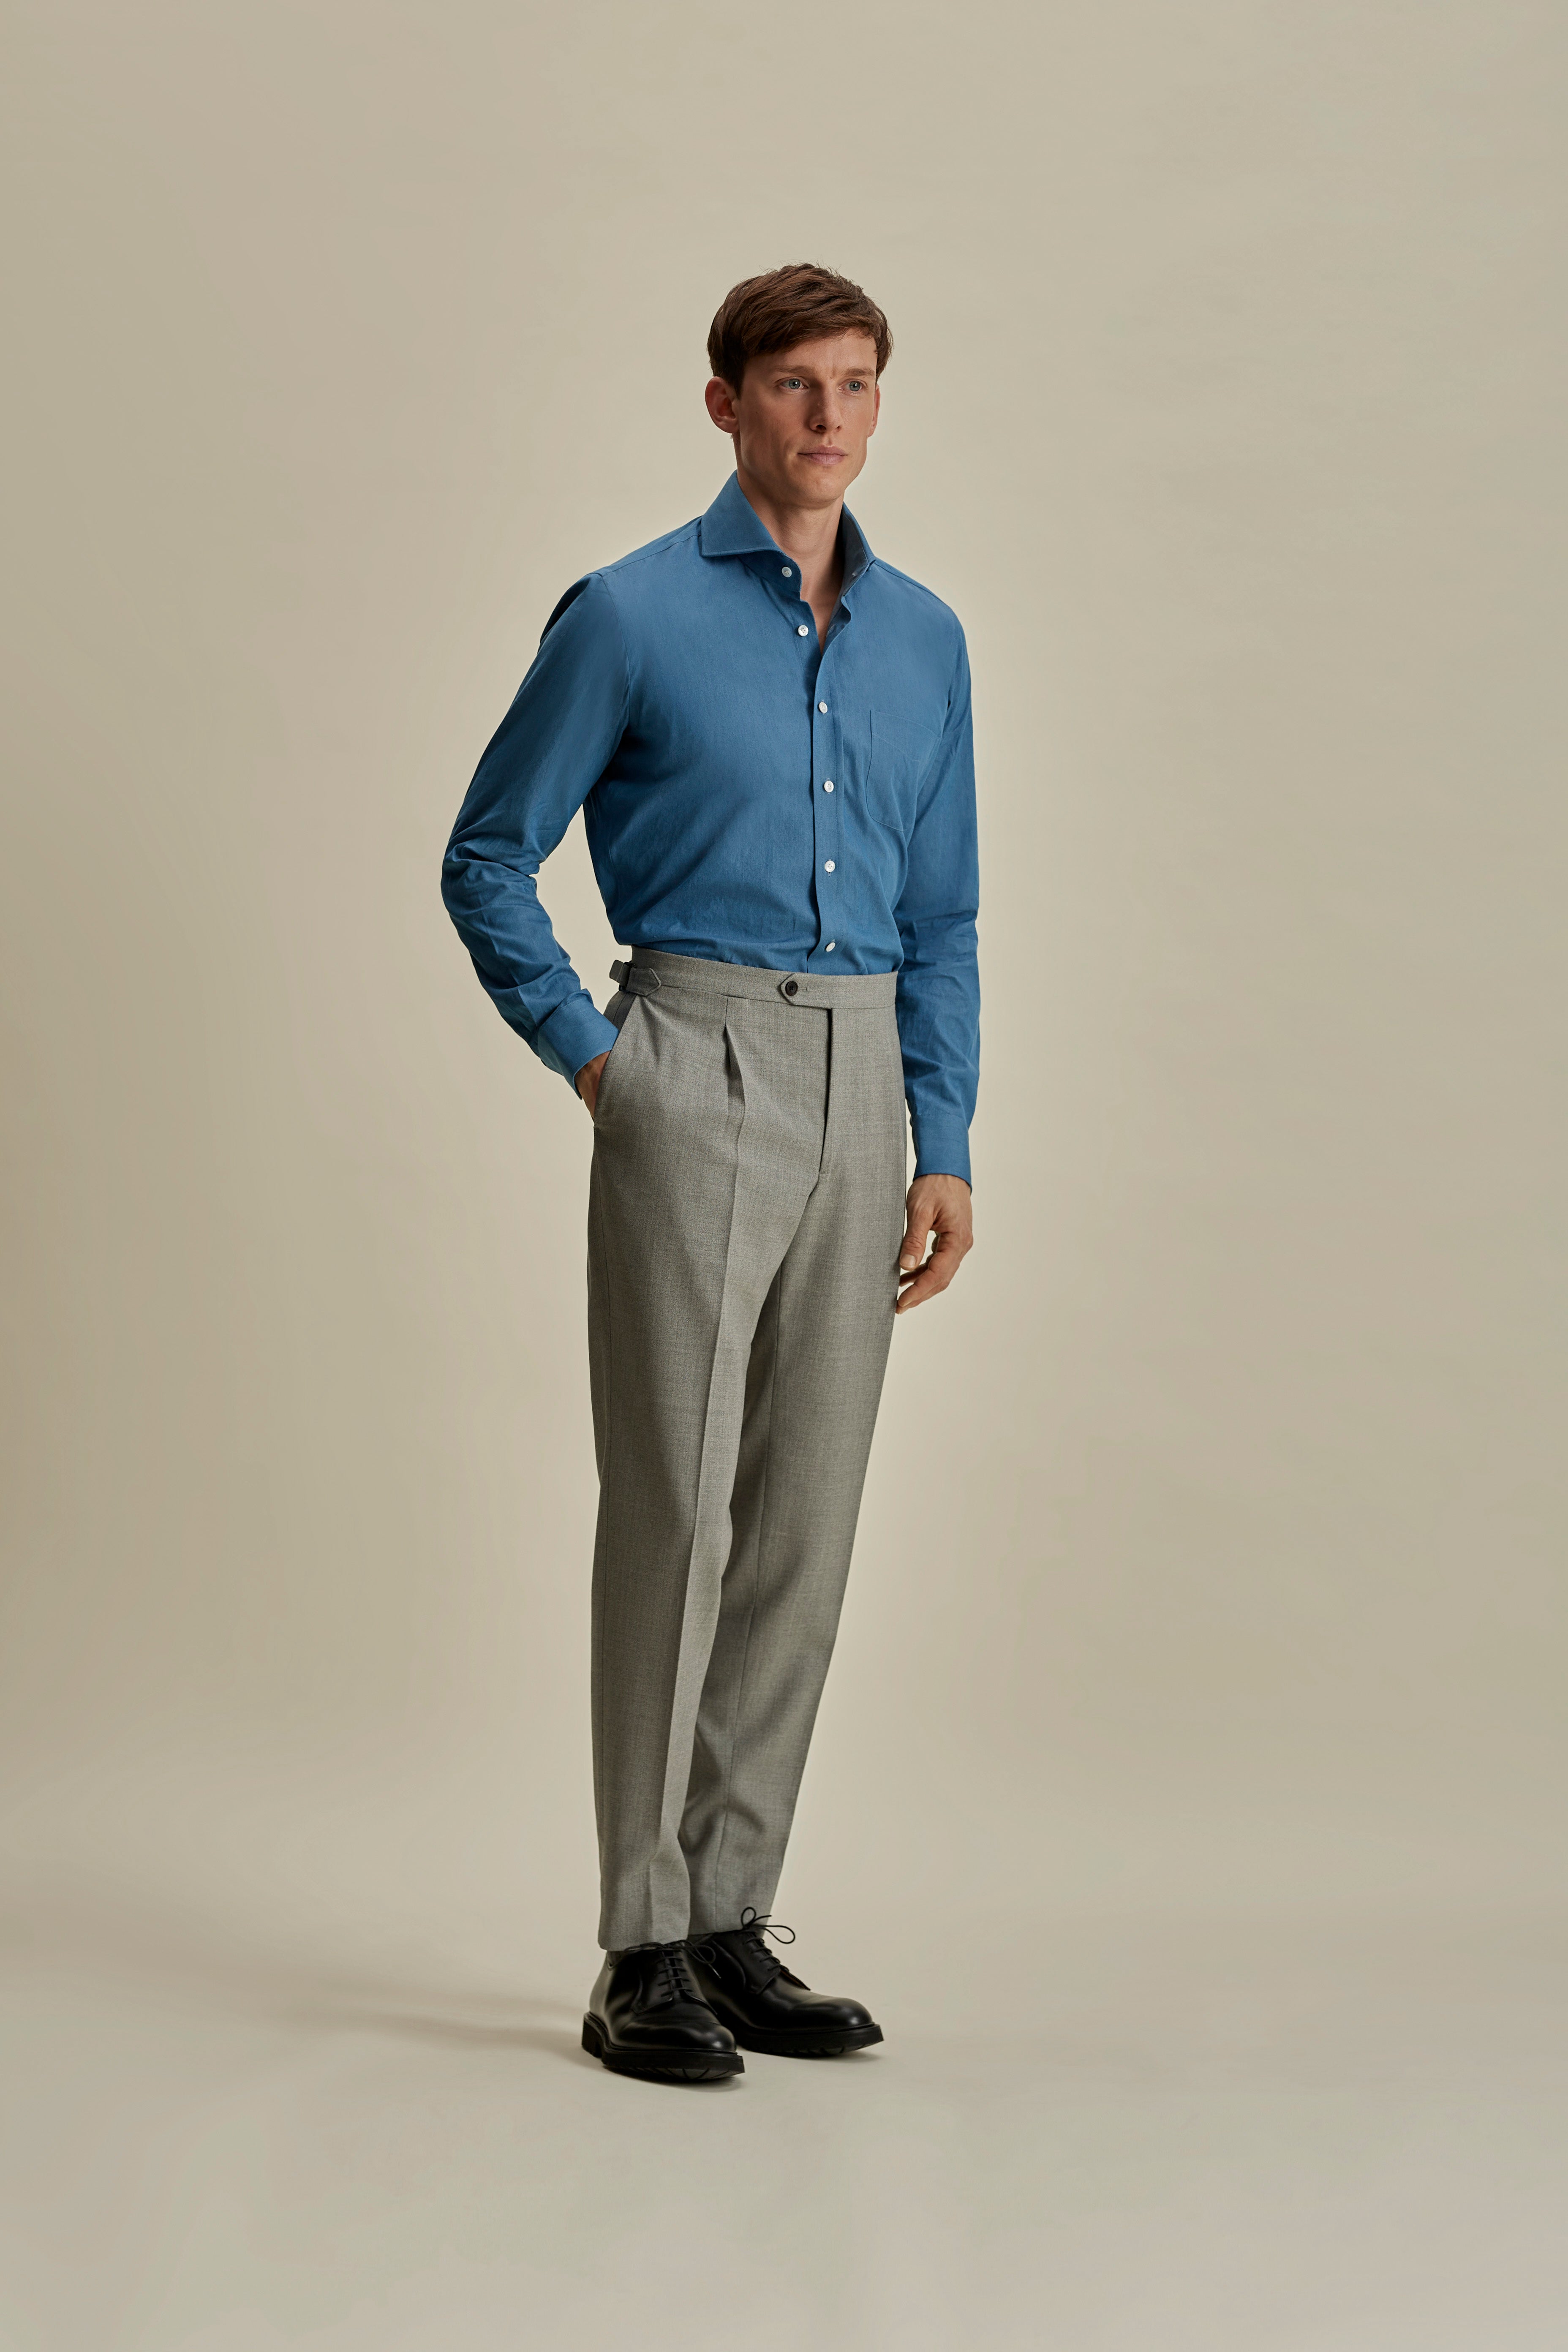 Cotton Chambray Cut Away Collar Shirt Full Length Model Image